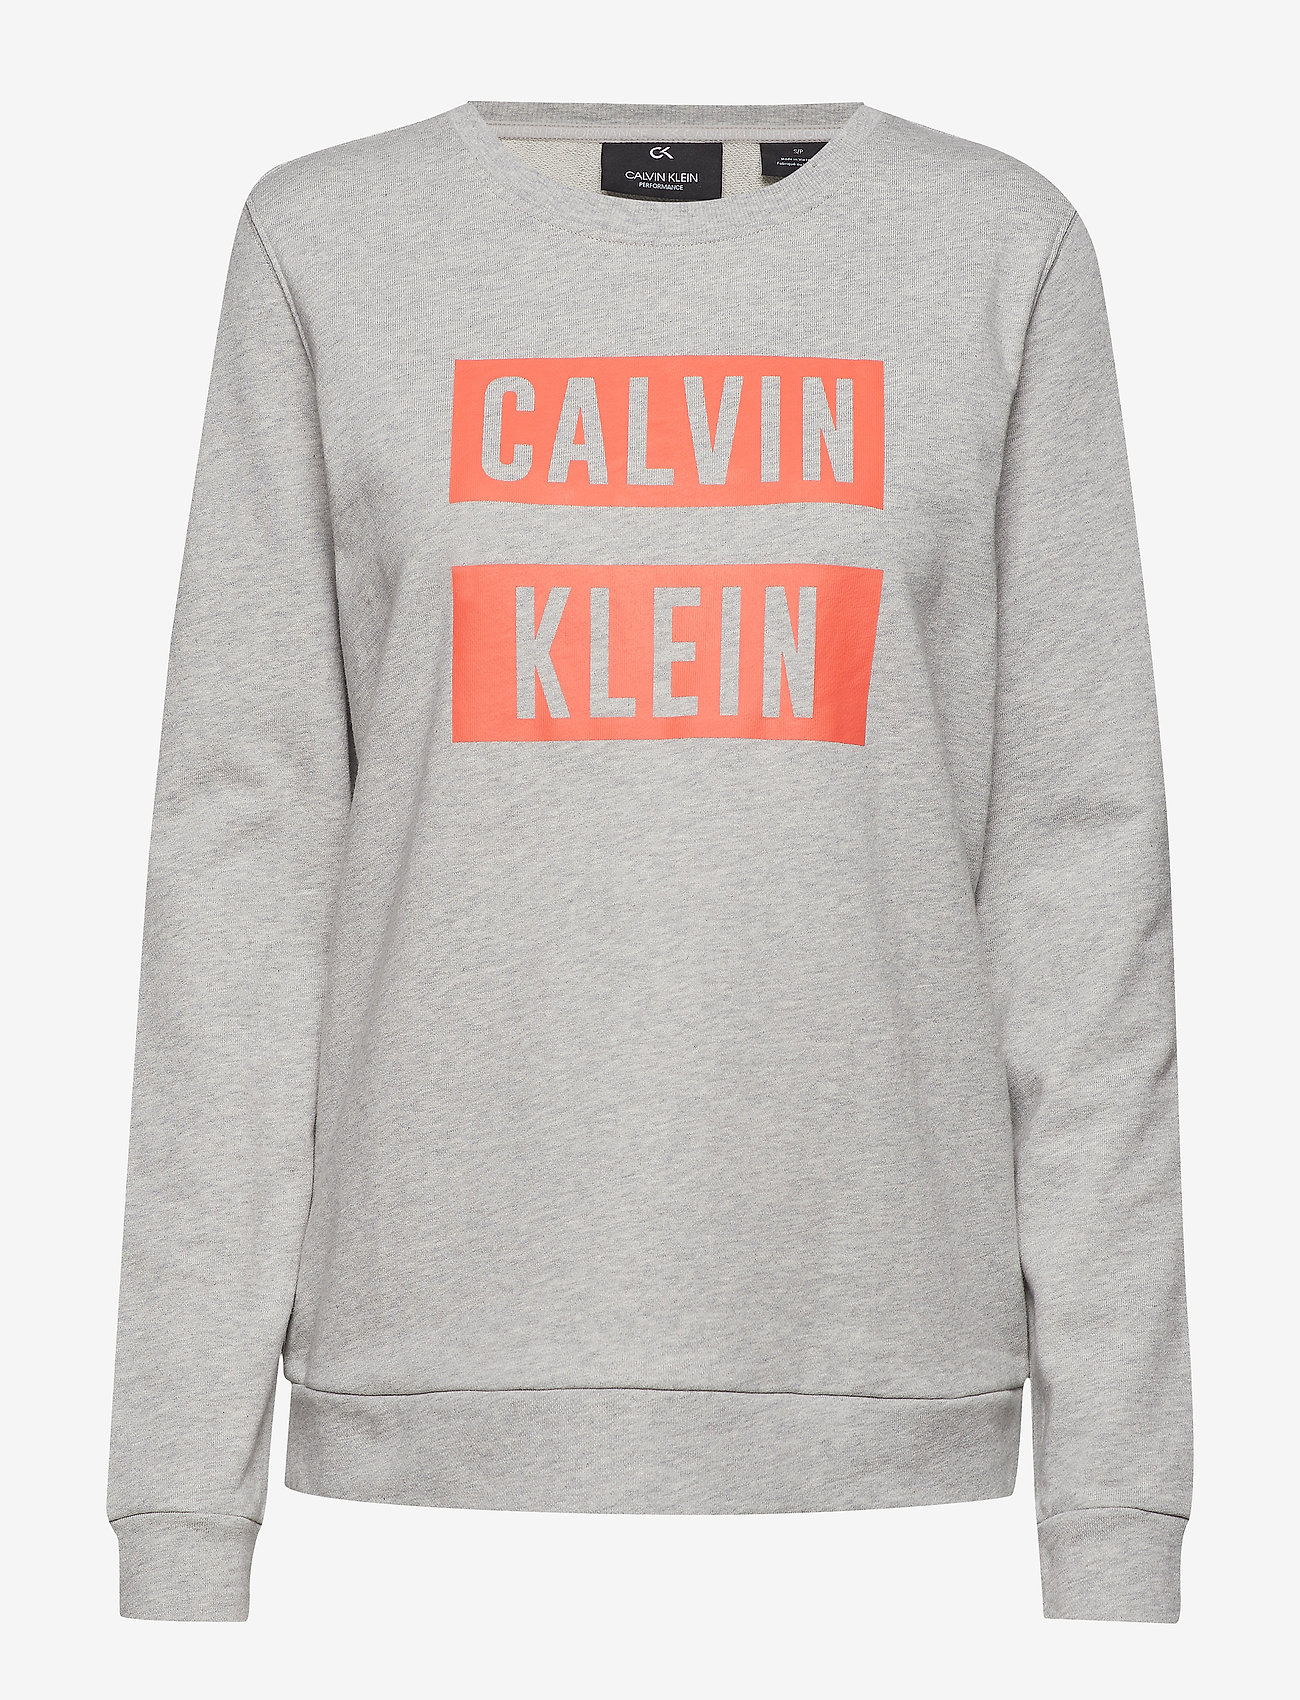 calvin klein performance logo sweatshirt